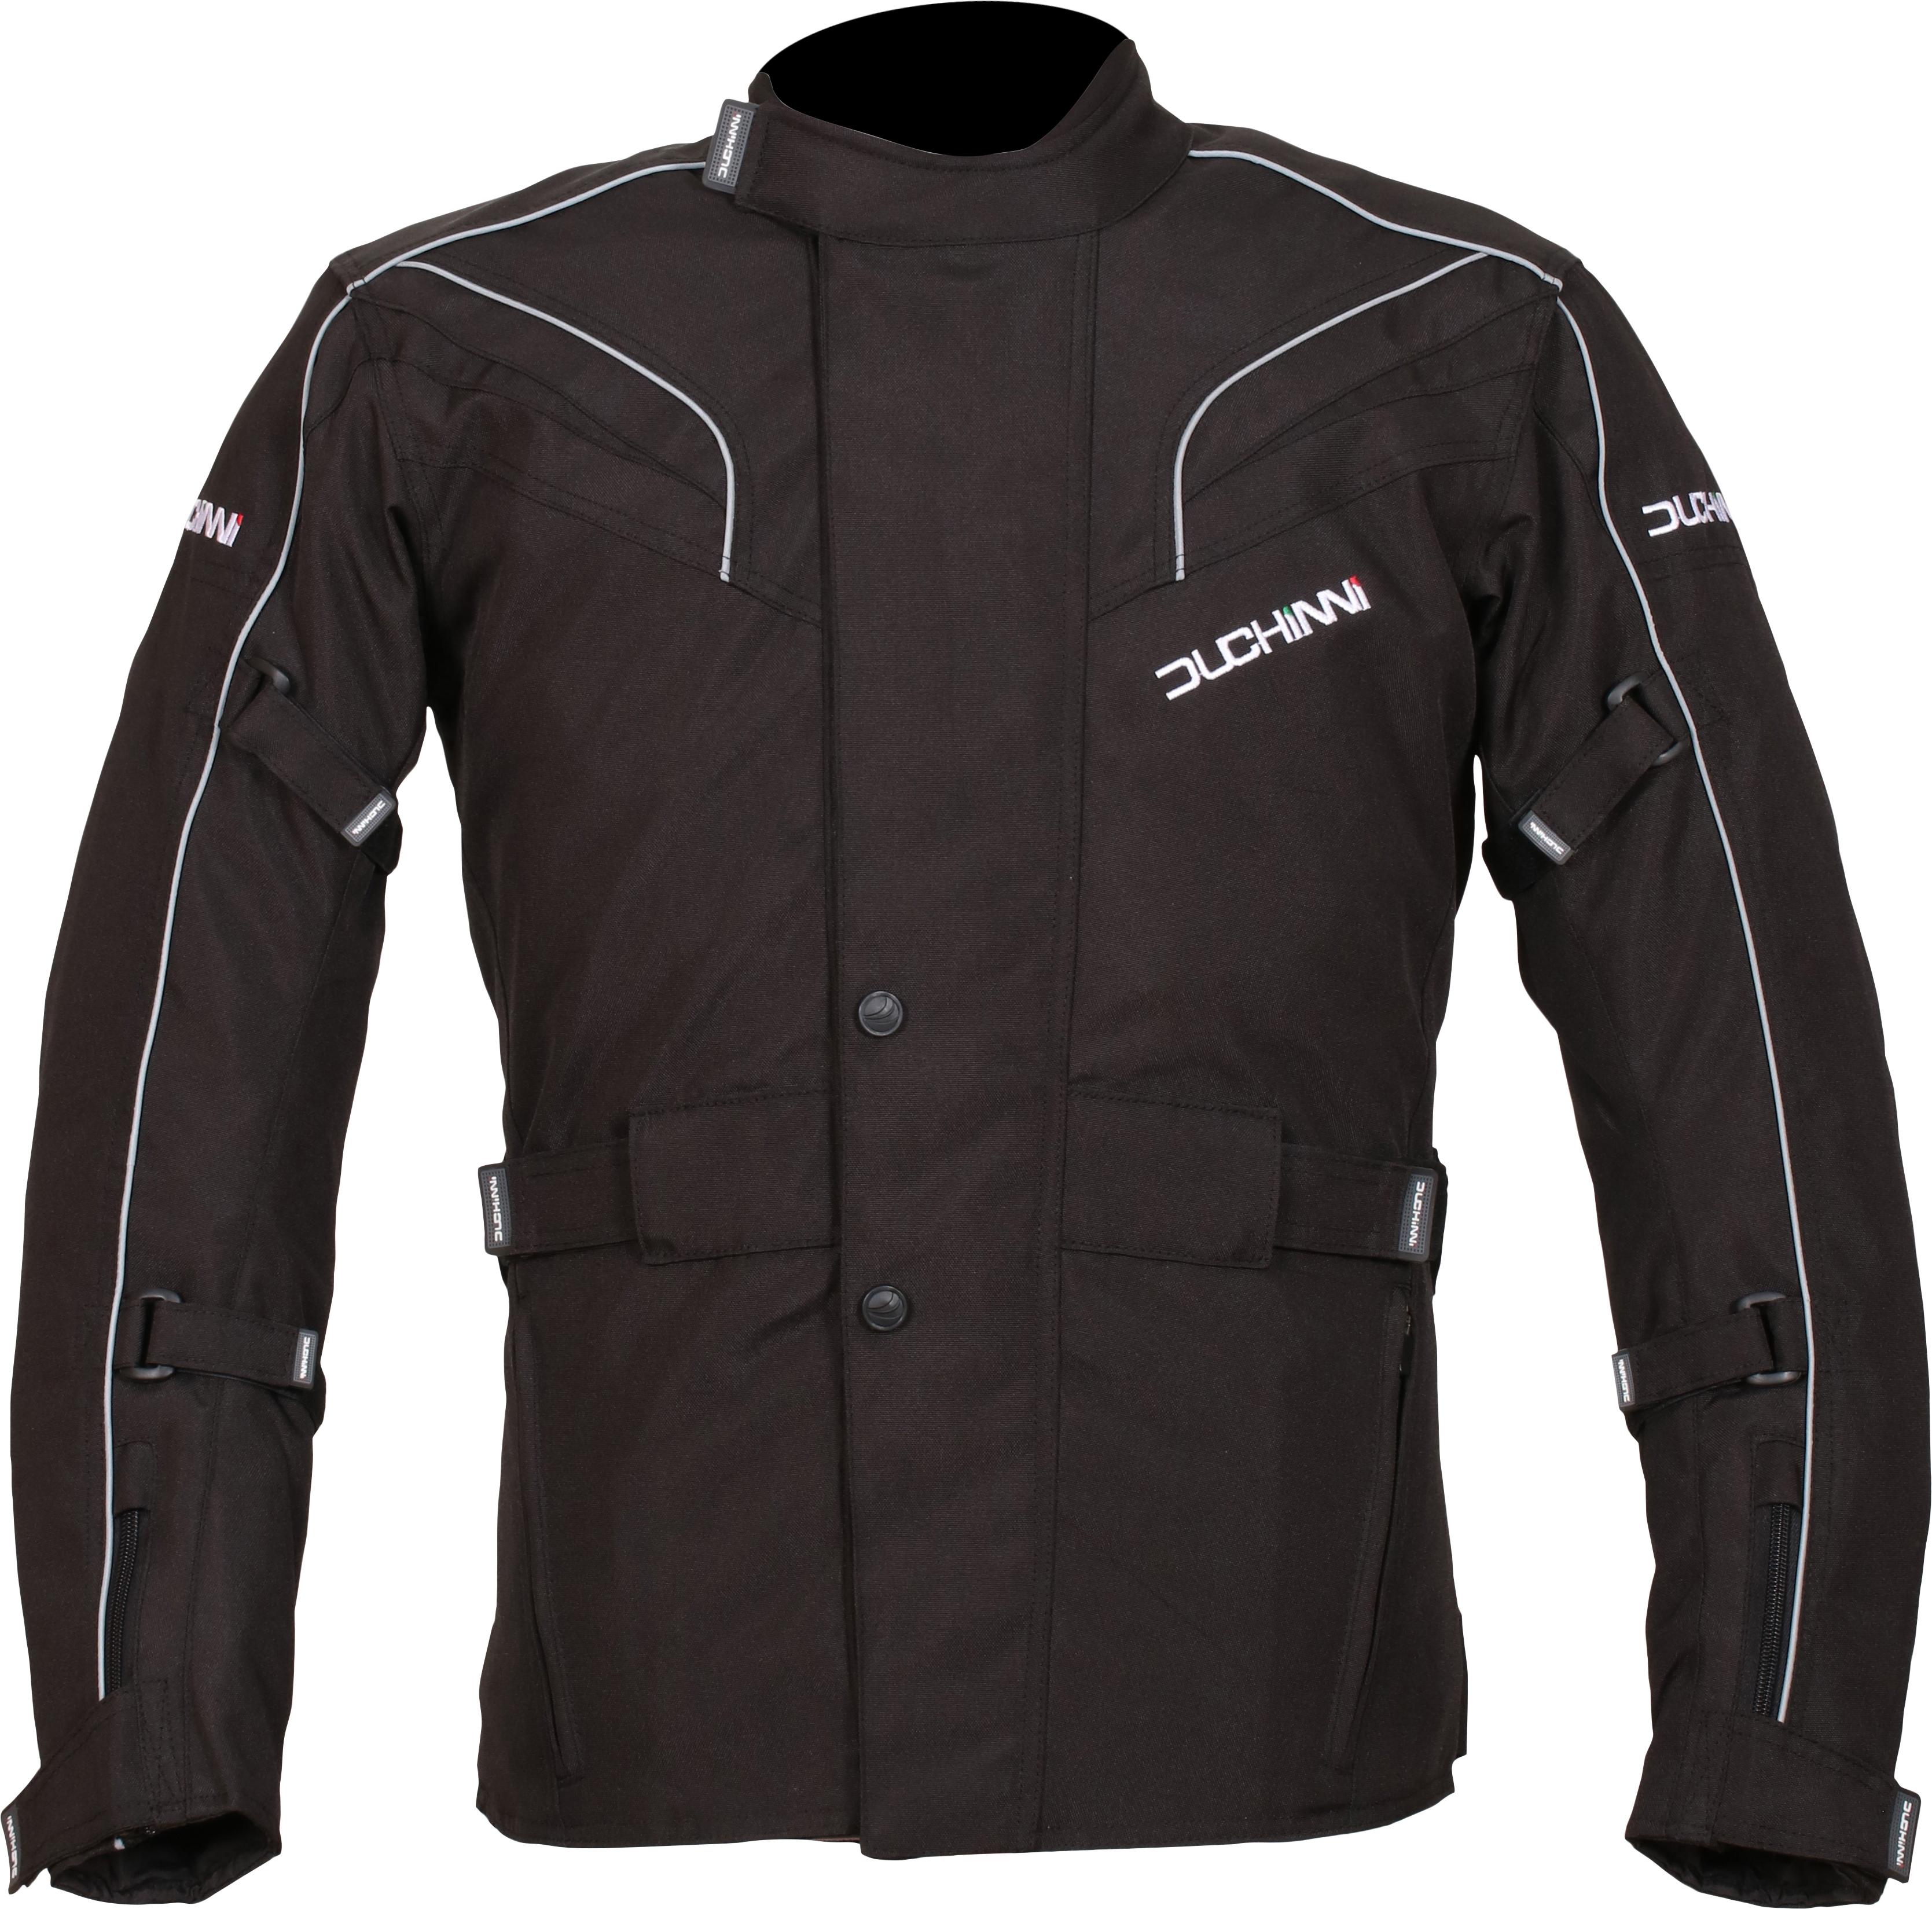 Duchinni Hurricane Motorcycle Jacket - Black, 3Xl